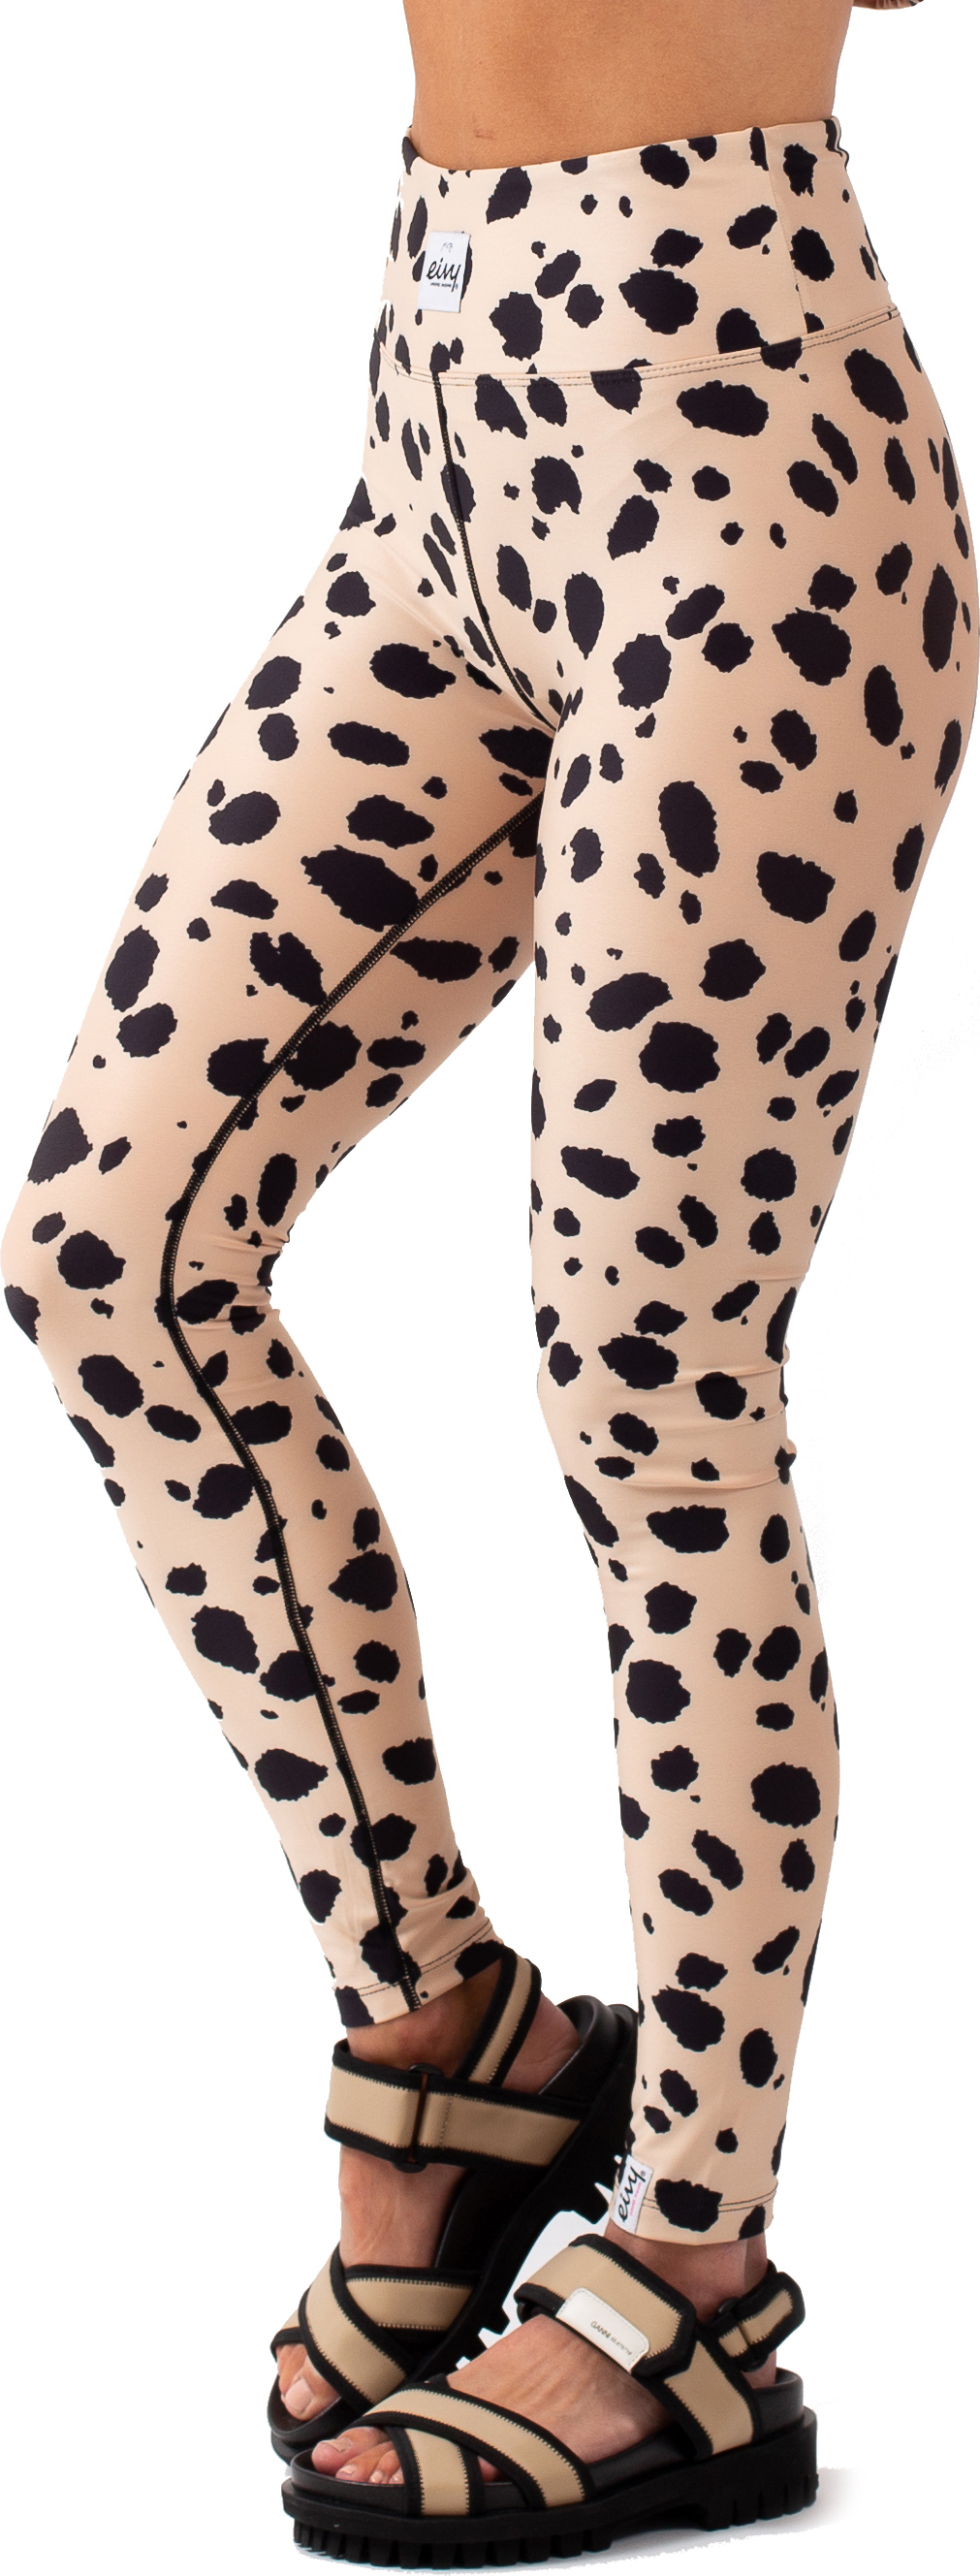 https://www.fjellsport.no/assets/blobs/eivy-women-s-icecold-tights-cheetah-dc46c6c78f.jpeg